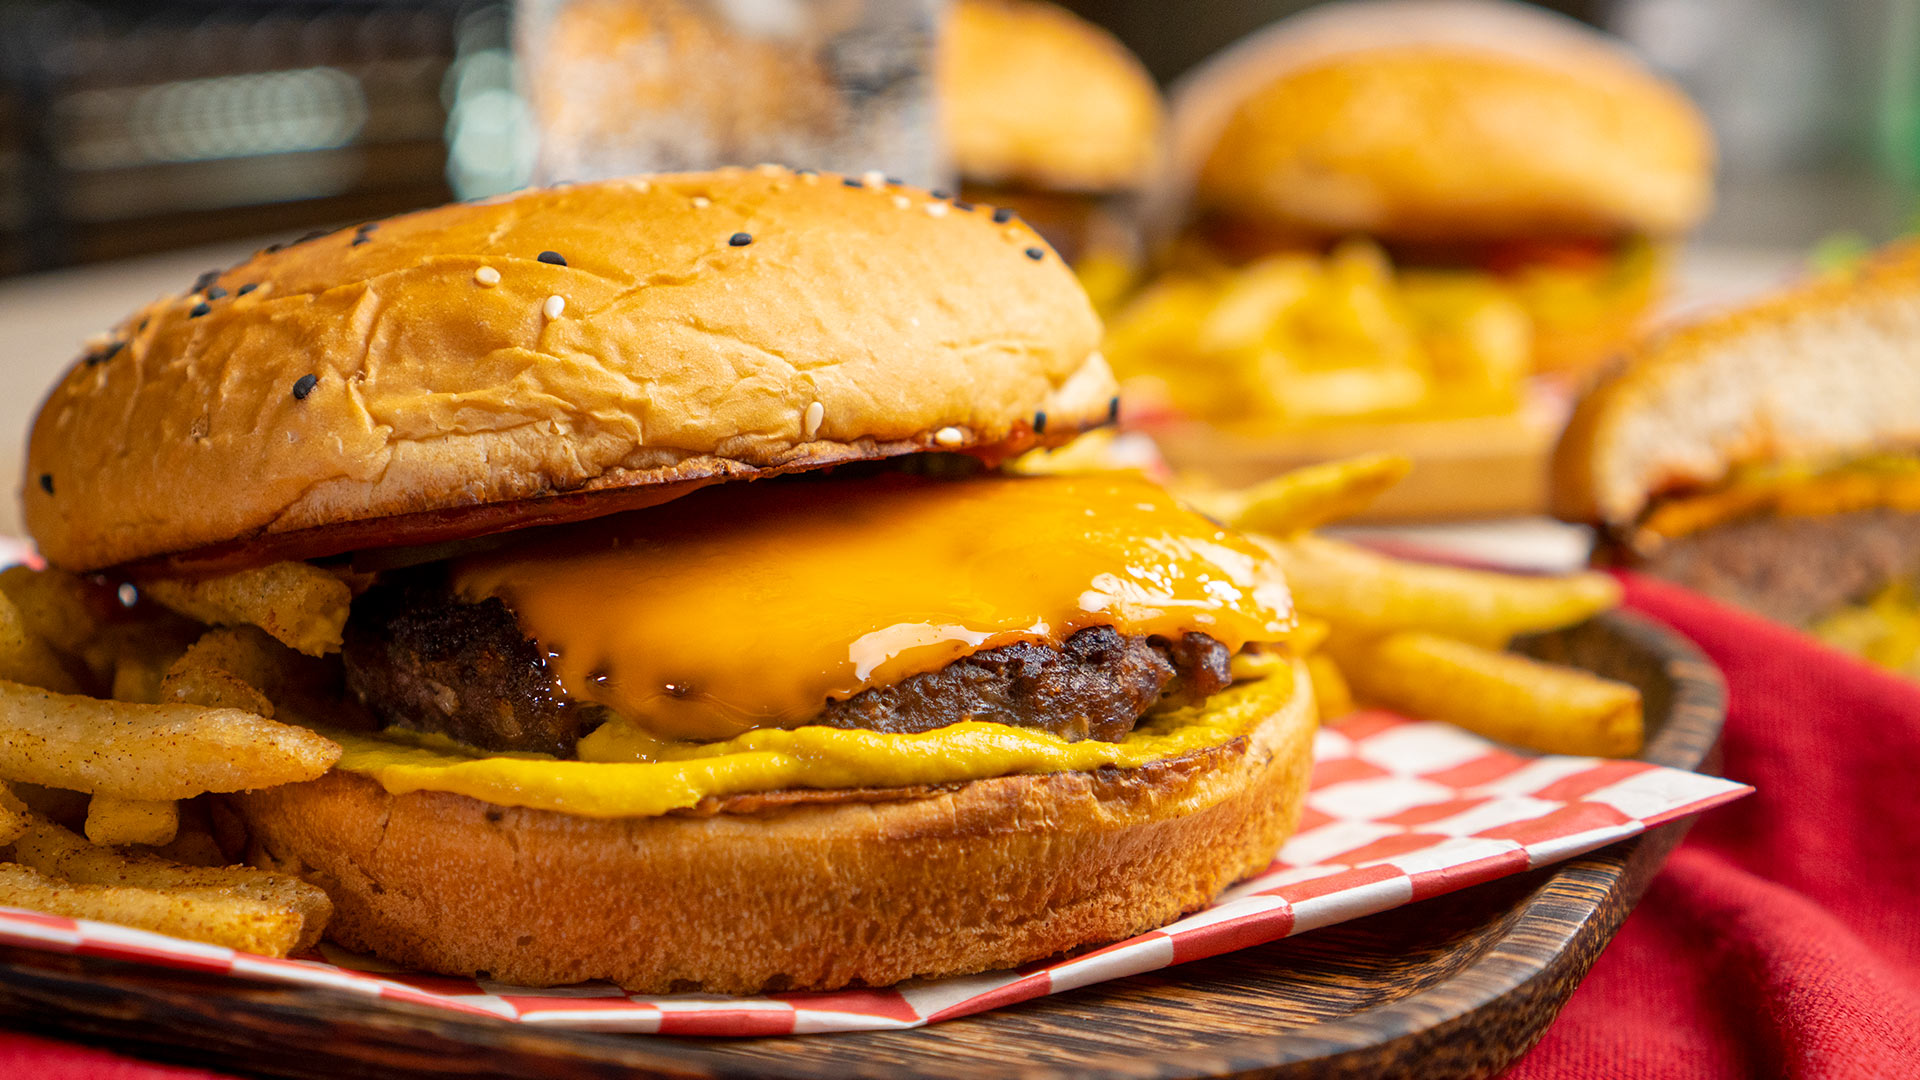 https://recipes.net/wp-content/uploads/2020/03/originial-mcdonalds-cheeseburger-recipe.jpg